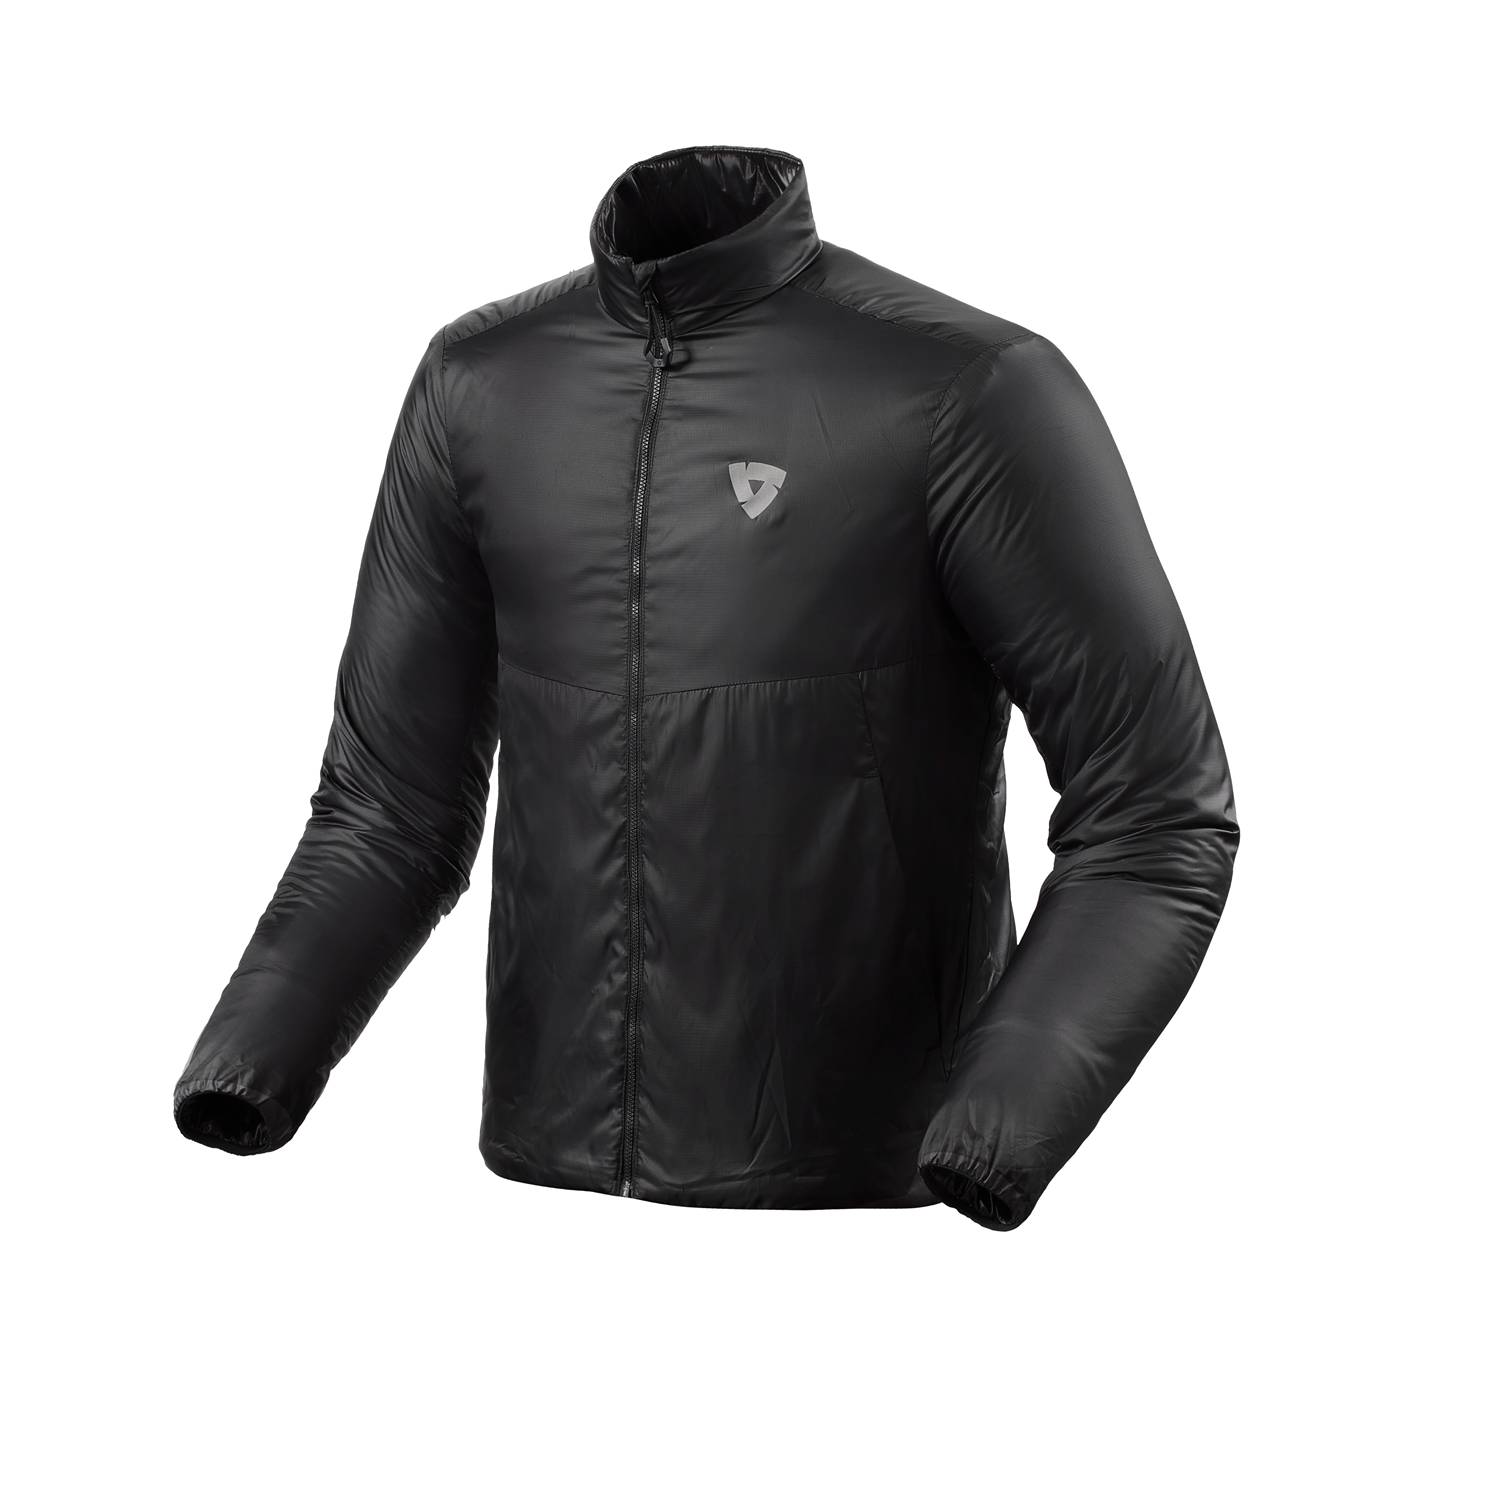 REV'IT! Core 2 Mid Layer Jacket Black Size S